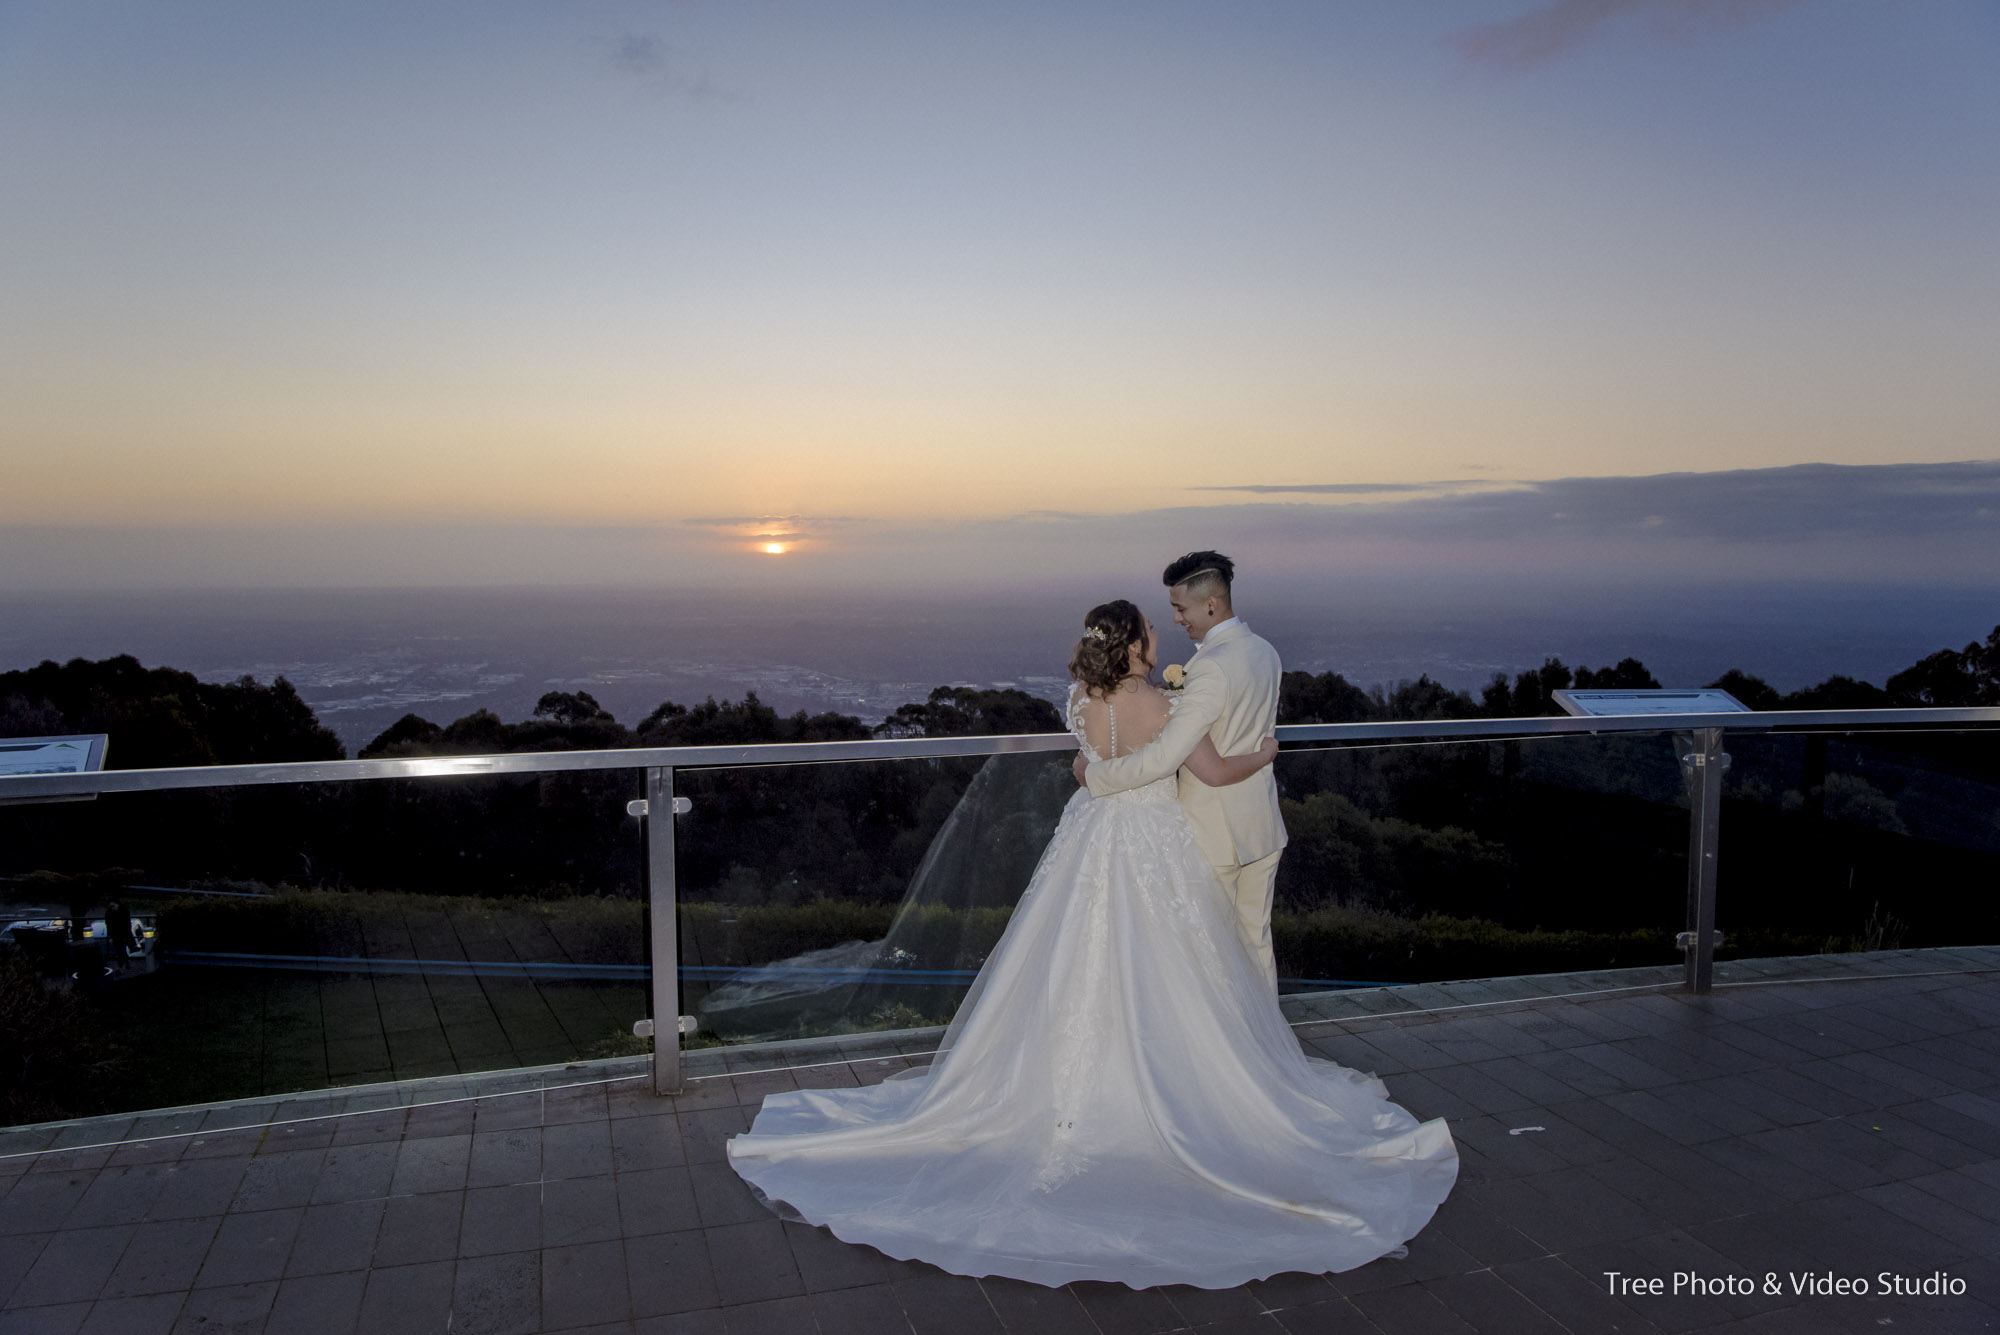 Stephanie & Nafsy's Wedding at Skyhigh Mount Dandenong